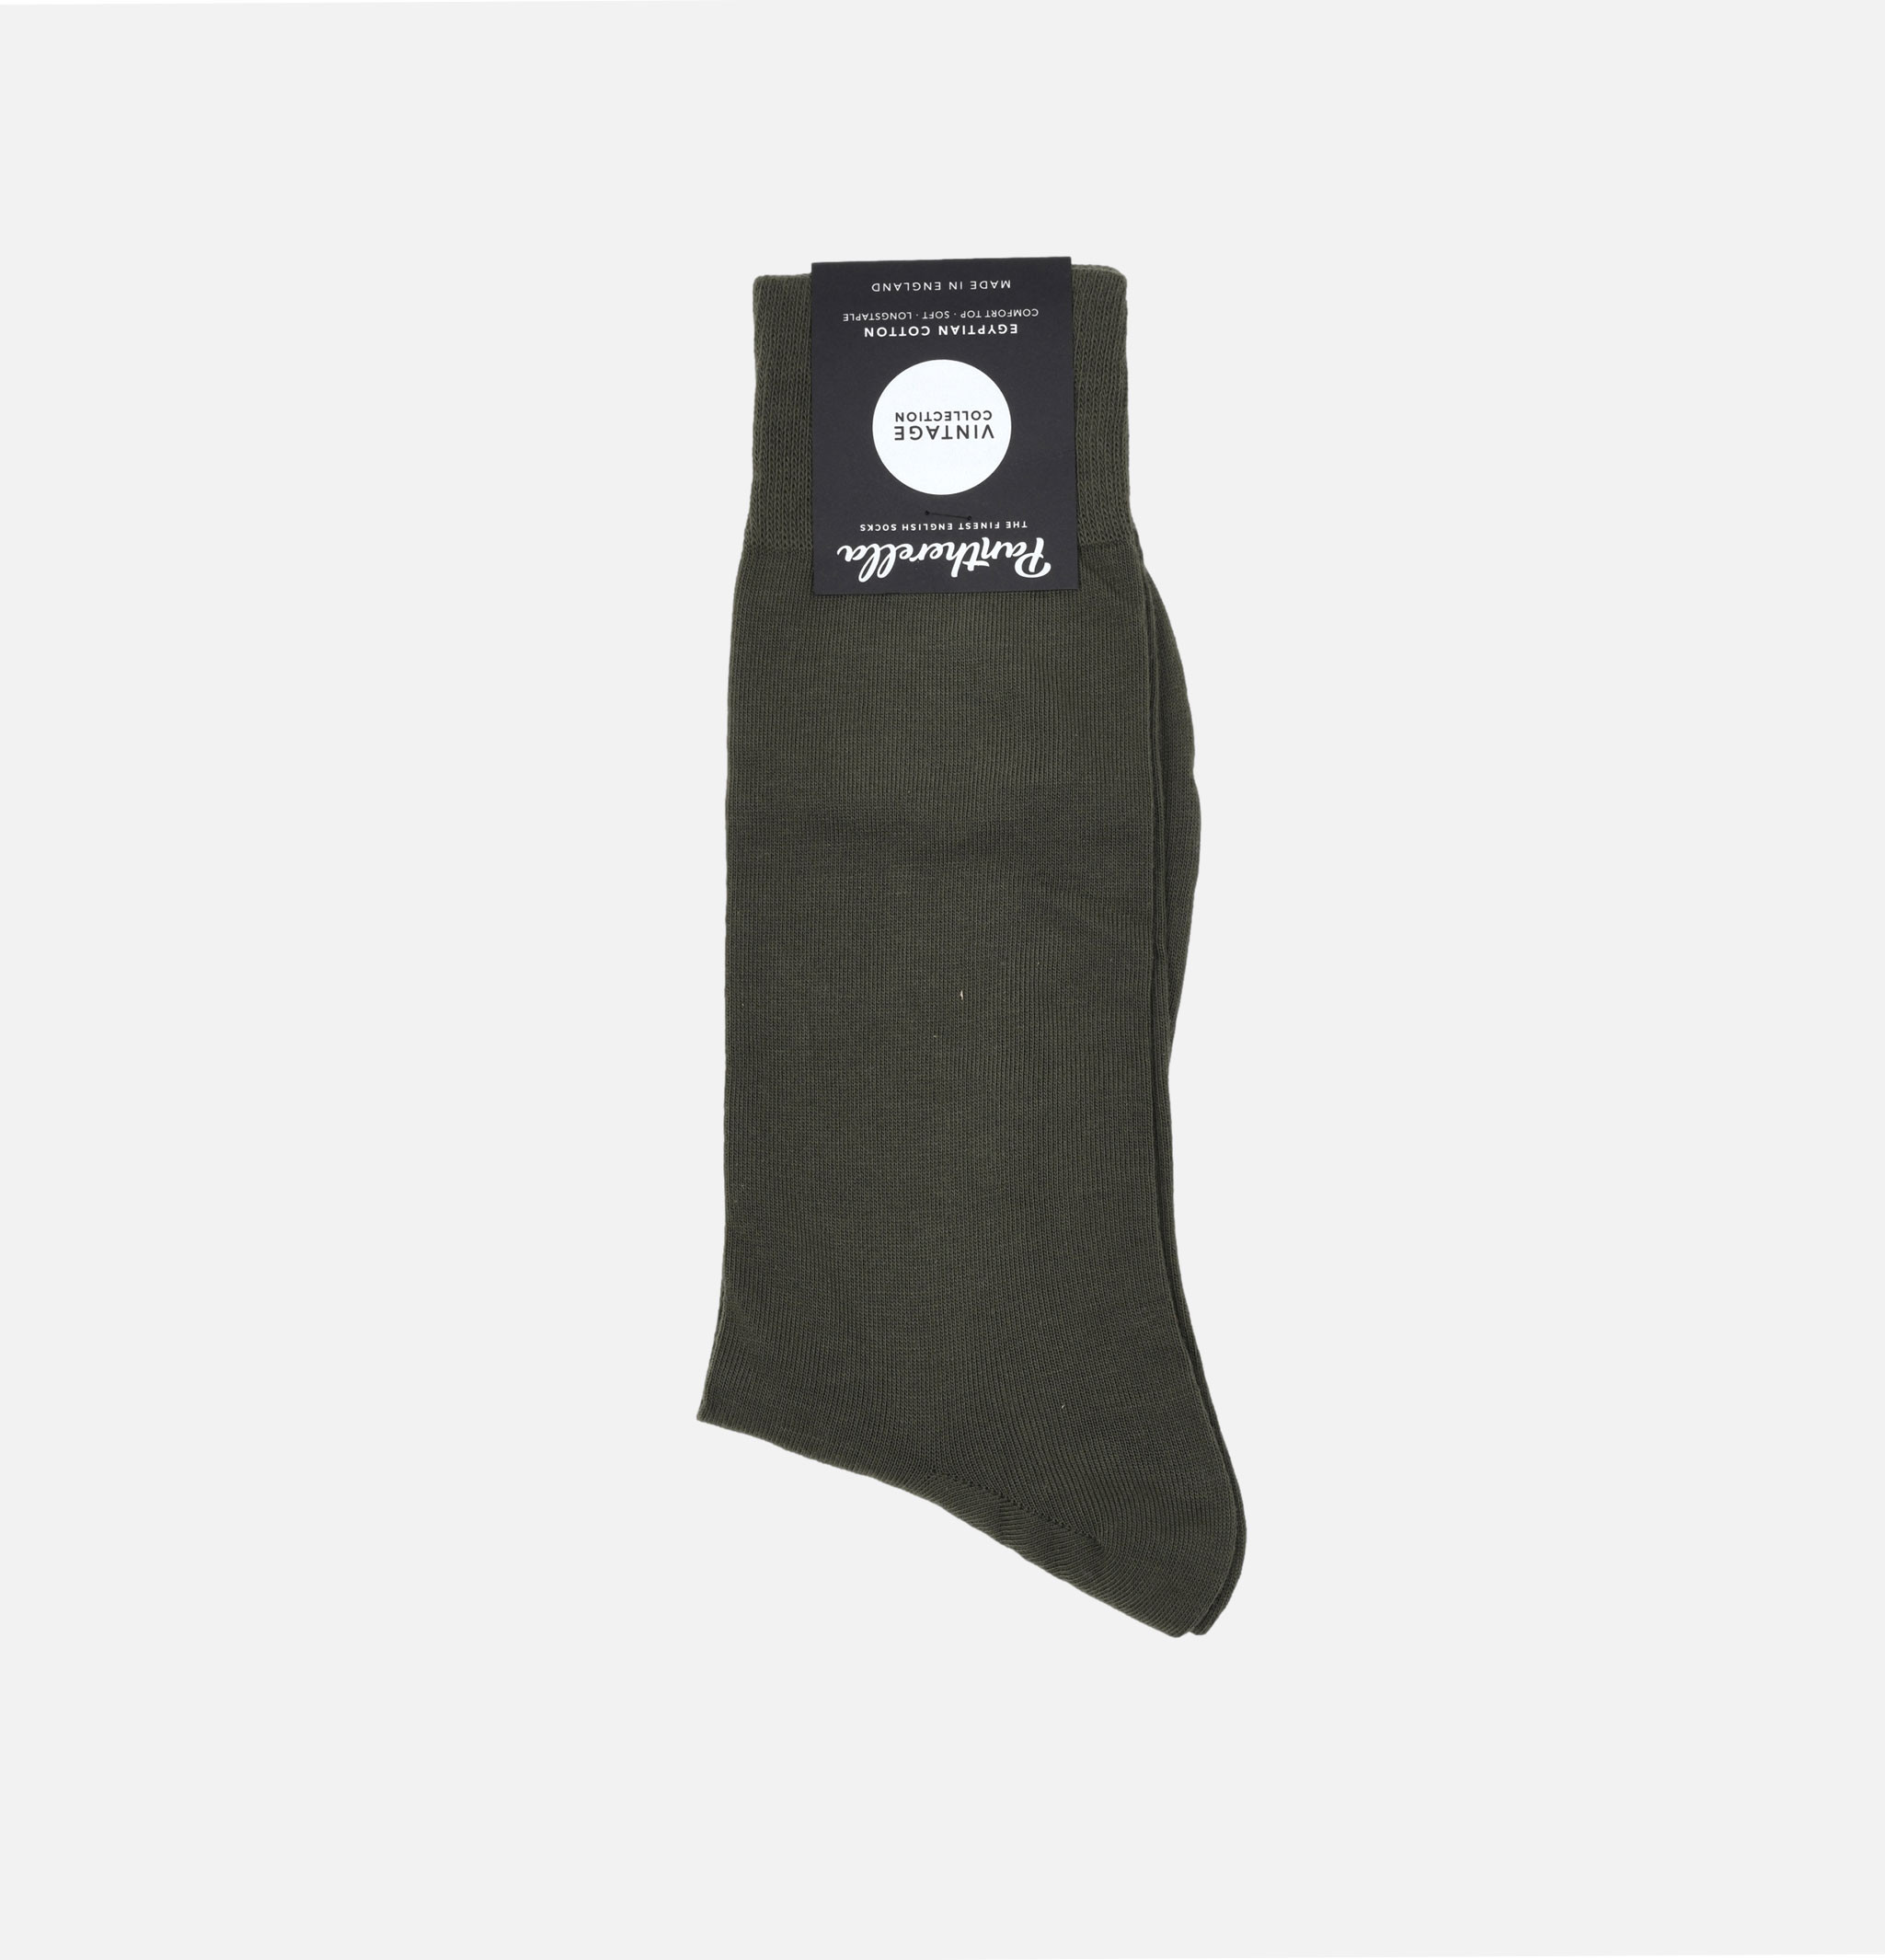 Pantherella Tavener Olive socks